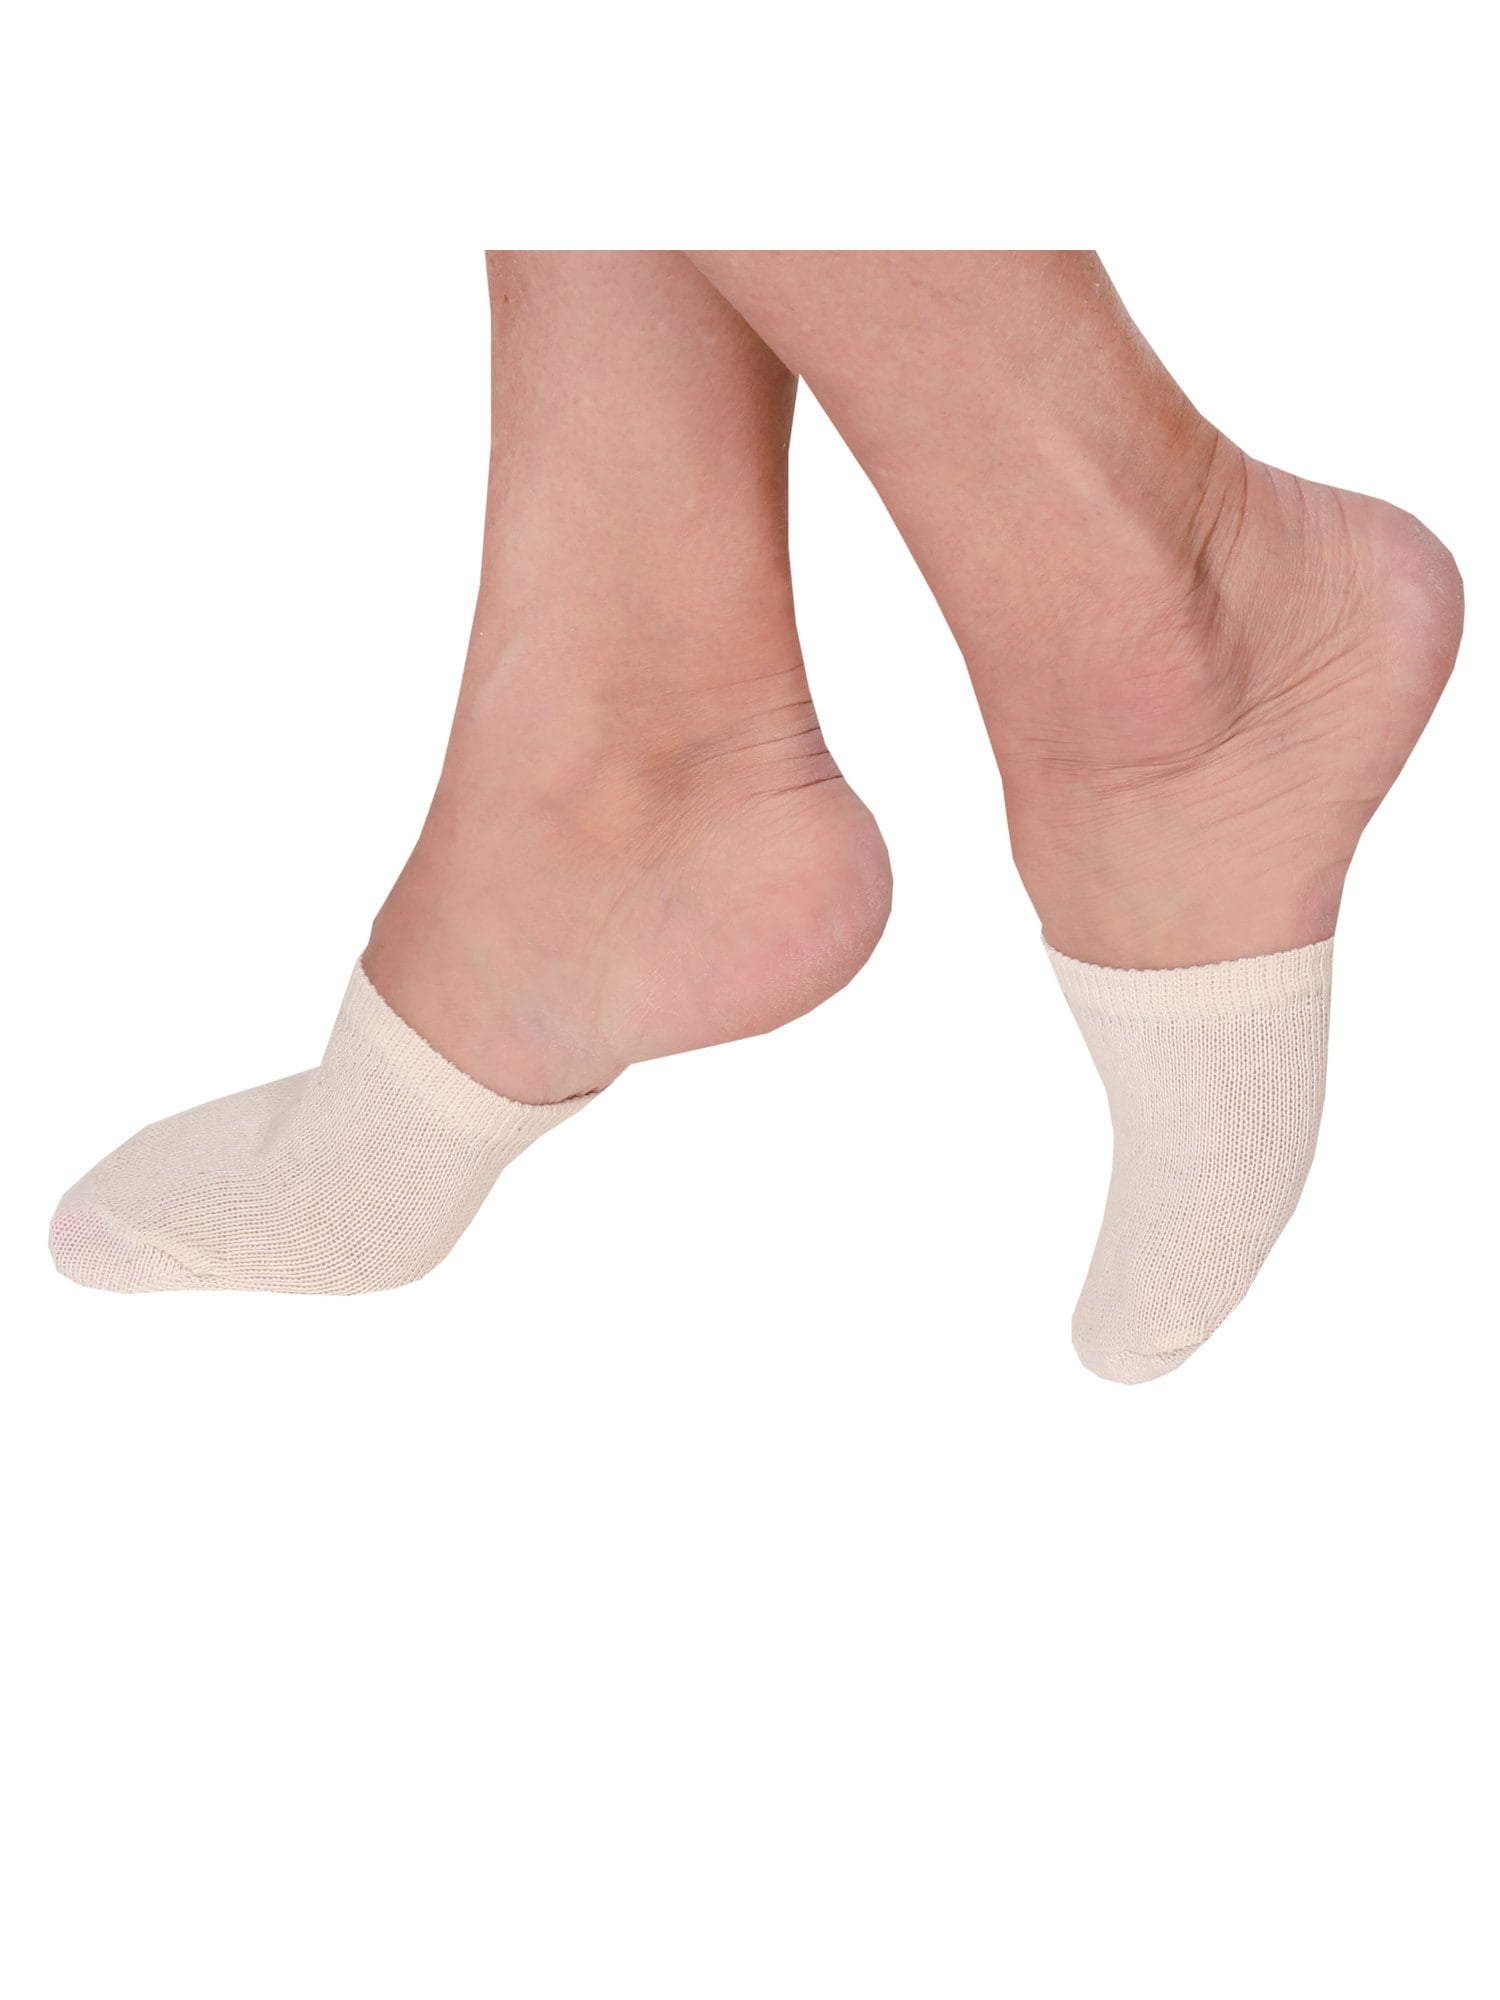 TRIUMPH HOSIERY Women's Toe Cover Socks Toe Topper Liner Half Socks, S 